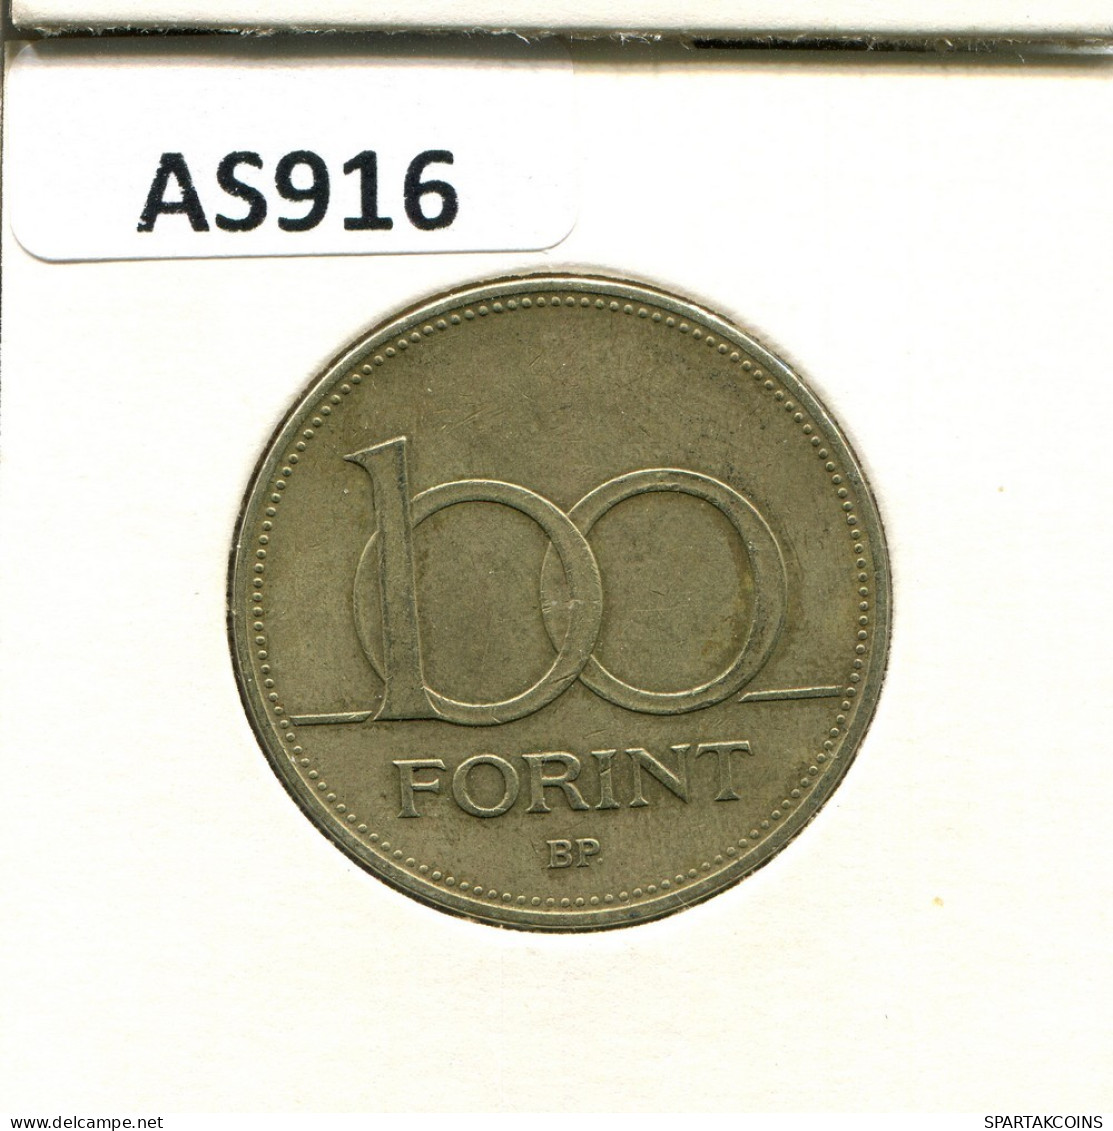 100 FORINT 1996 HUNGARY Coin #AS916.U.A - Hungary